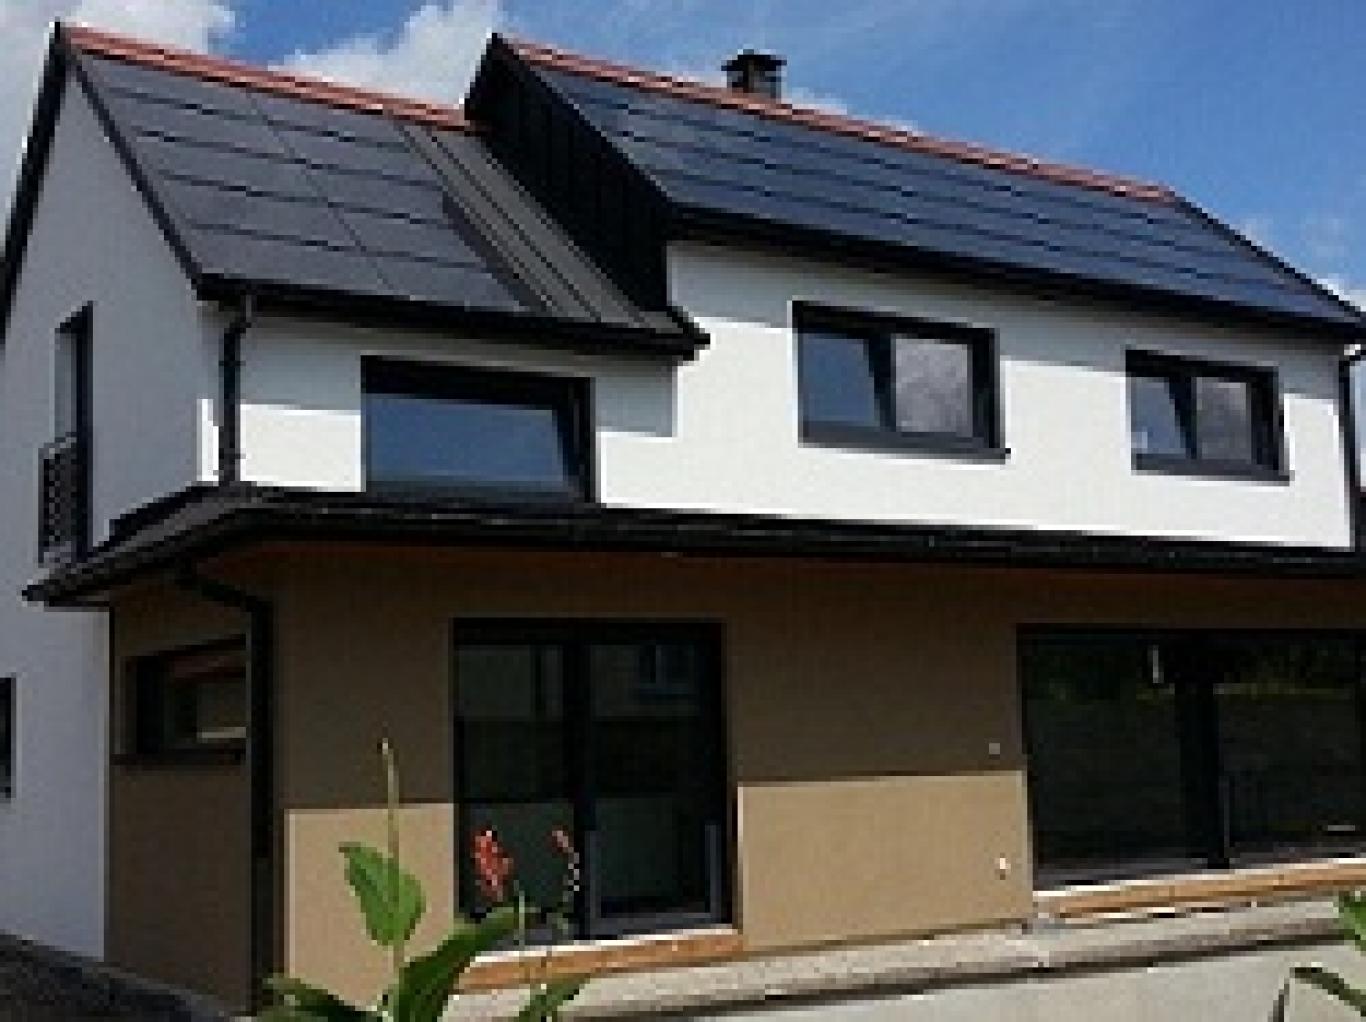 Panneaux photovoltaïques à Jebsheim